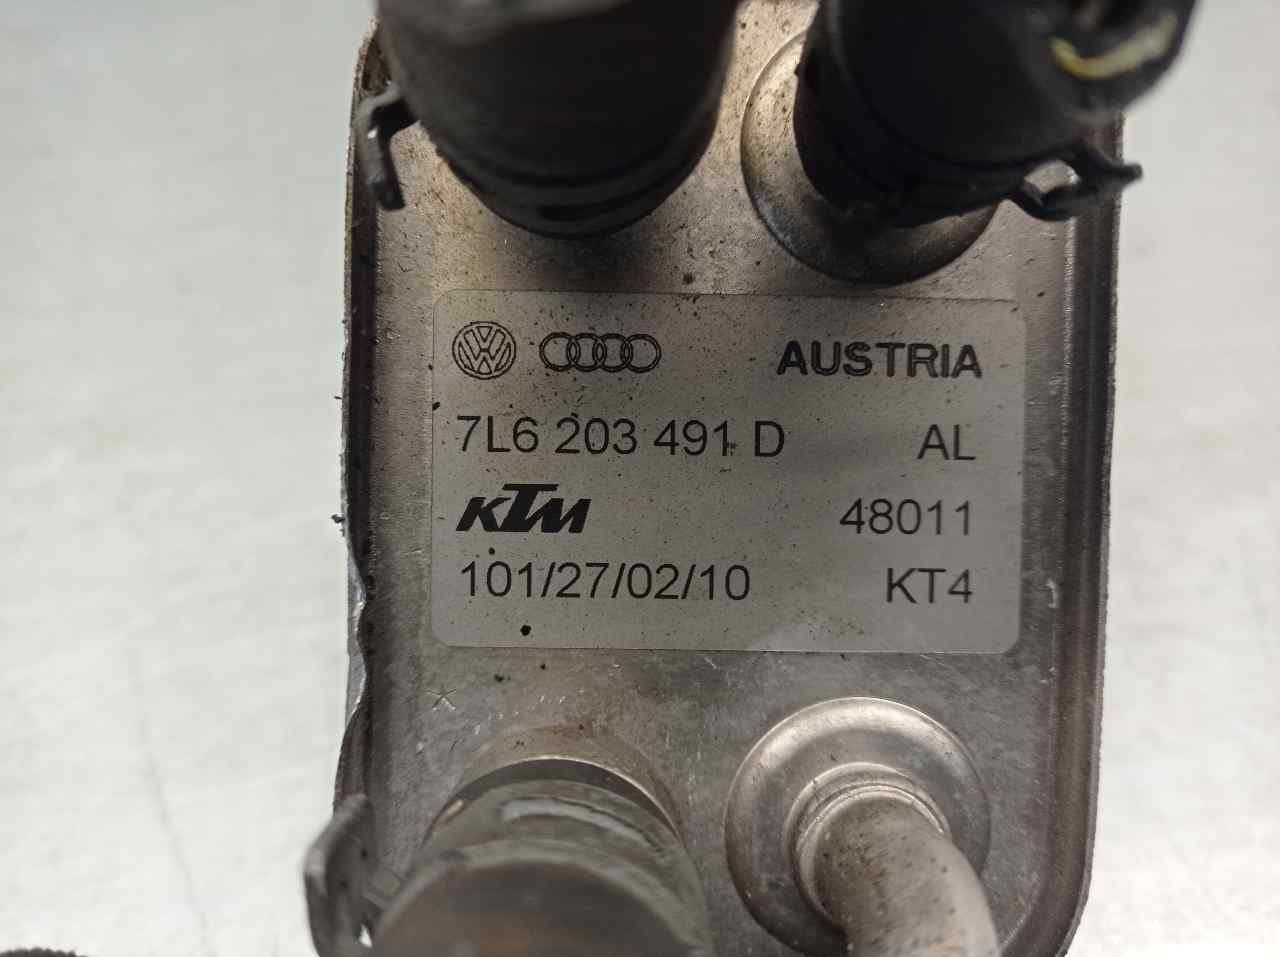 AUDI Q7 4L (2005-2015) Масляный радиатор 7L6203491D, 101270210, KTM 19880814